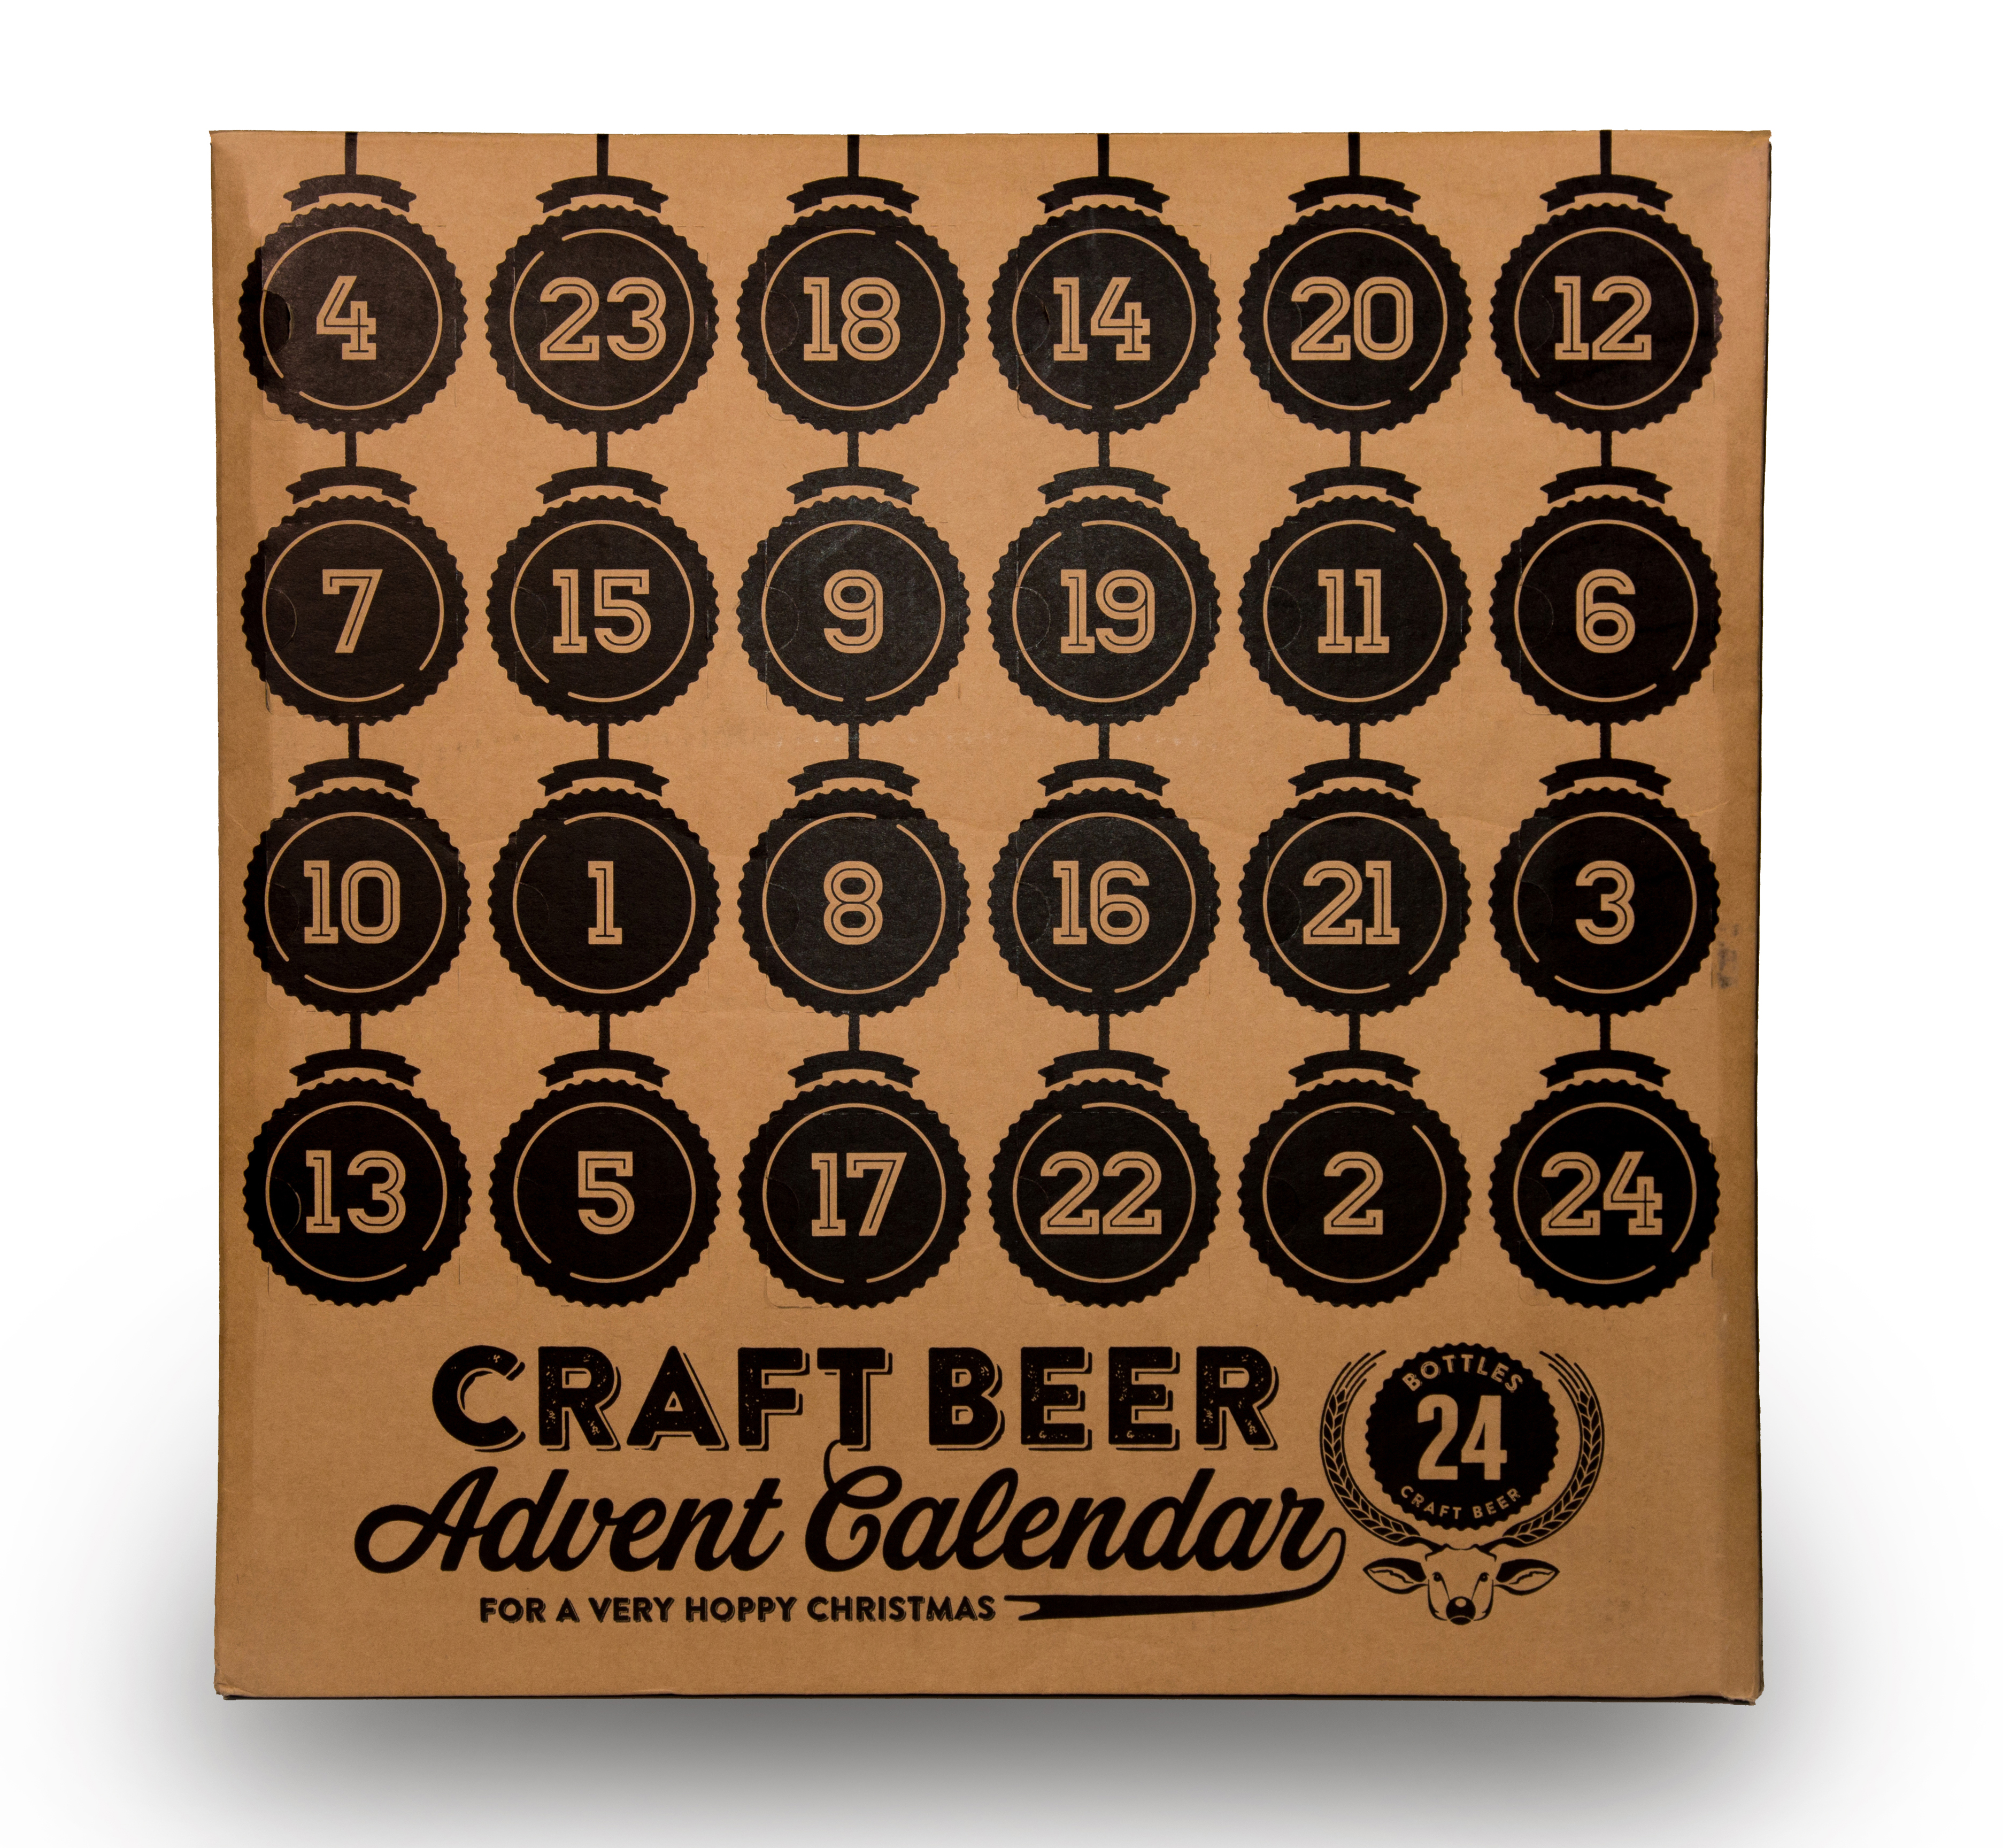 craft beer advent aclendar 2015